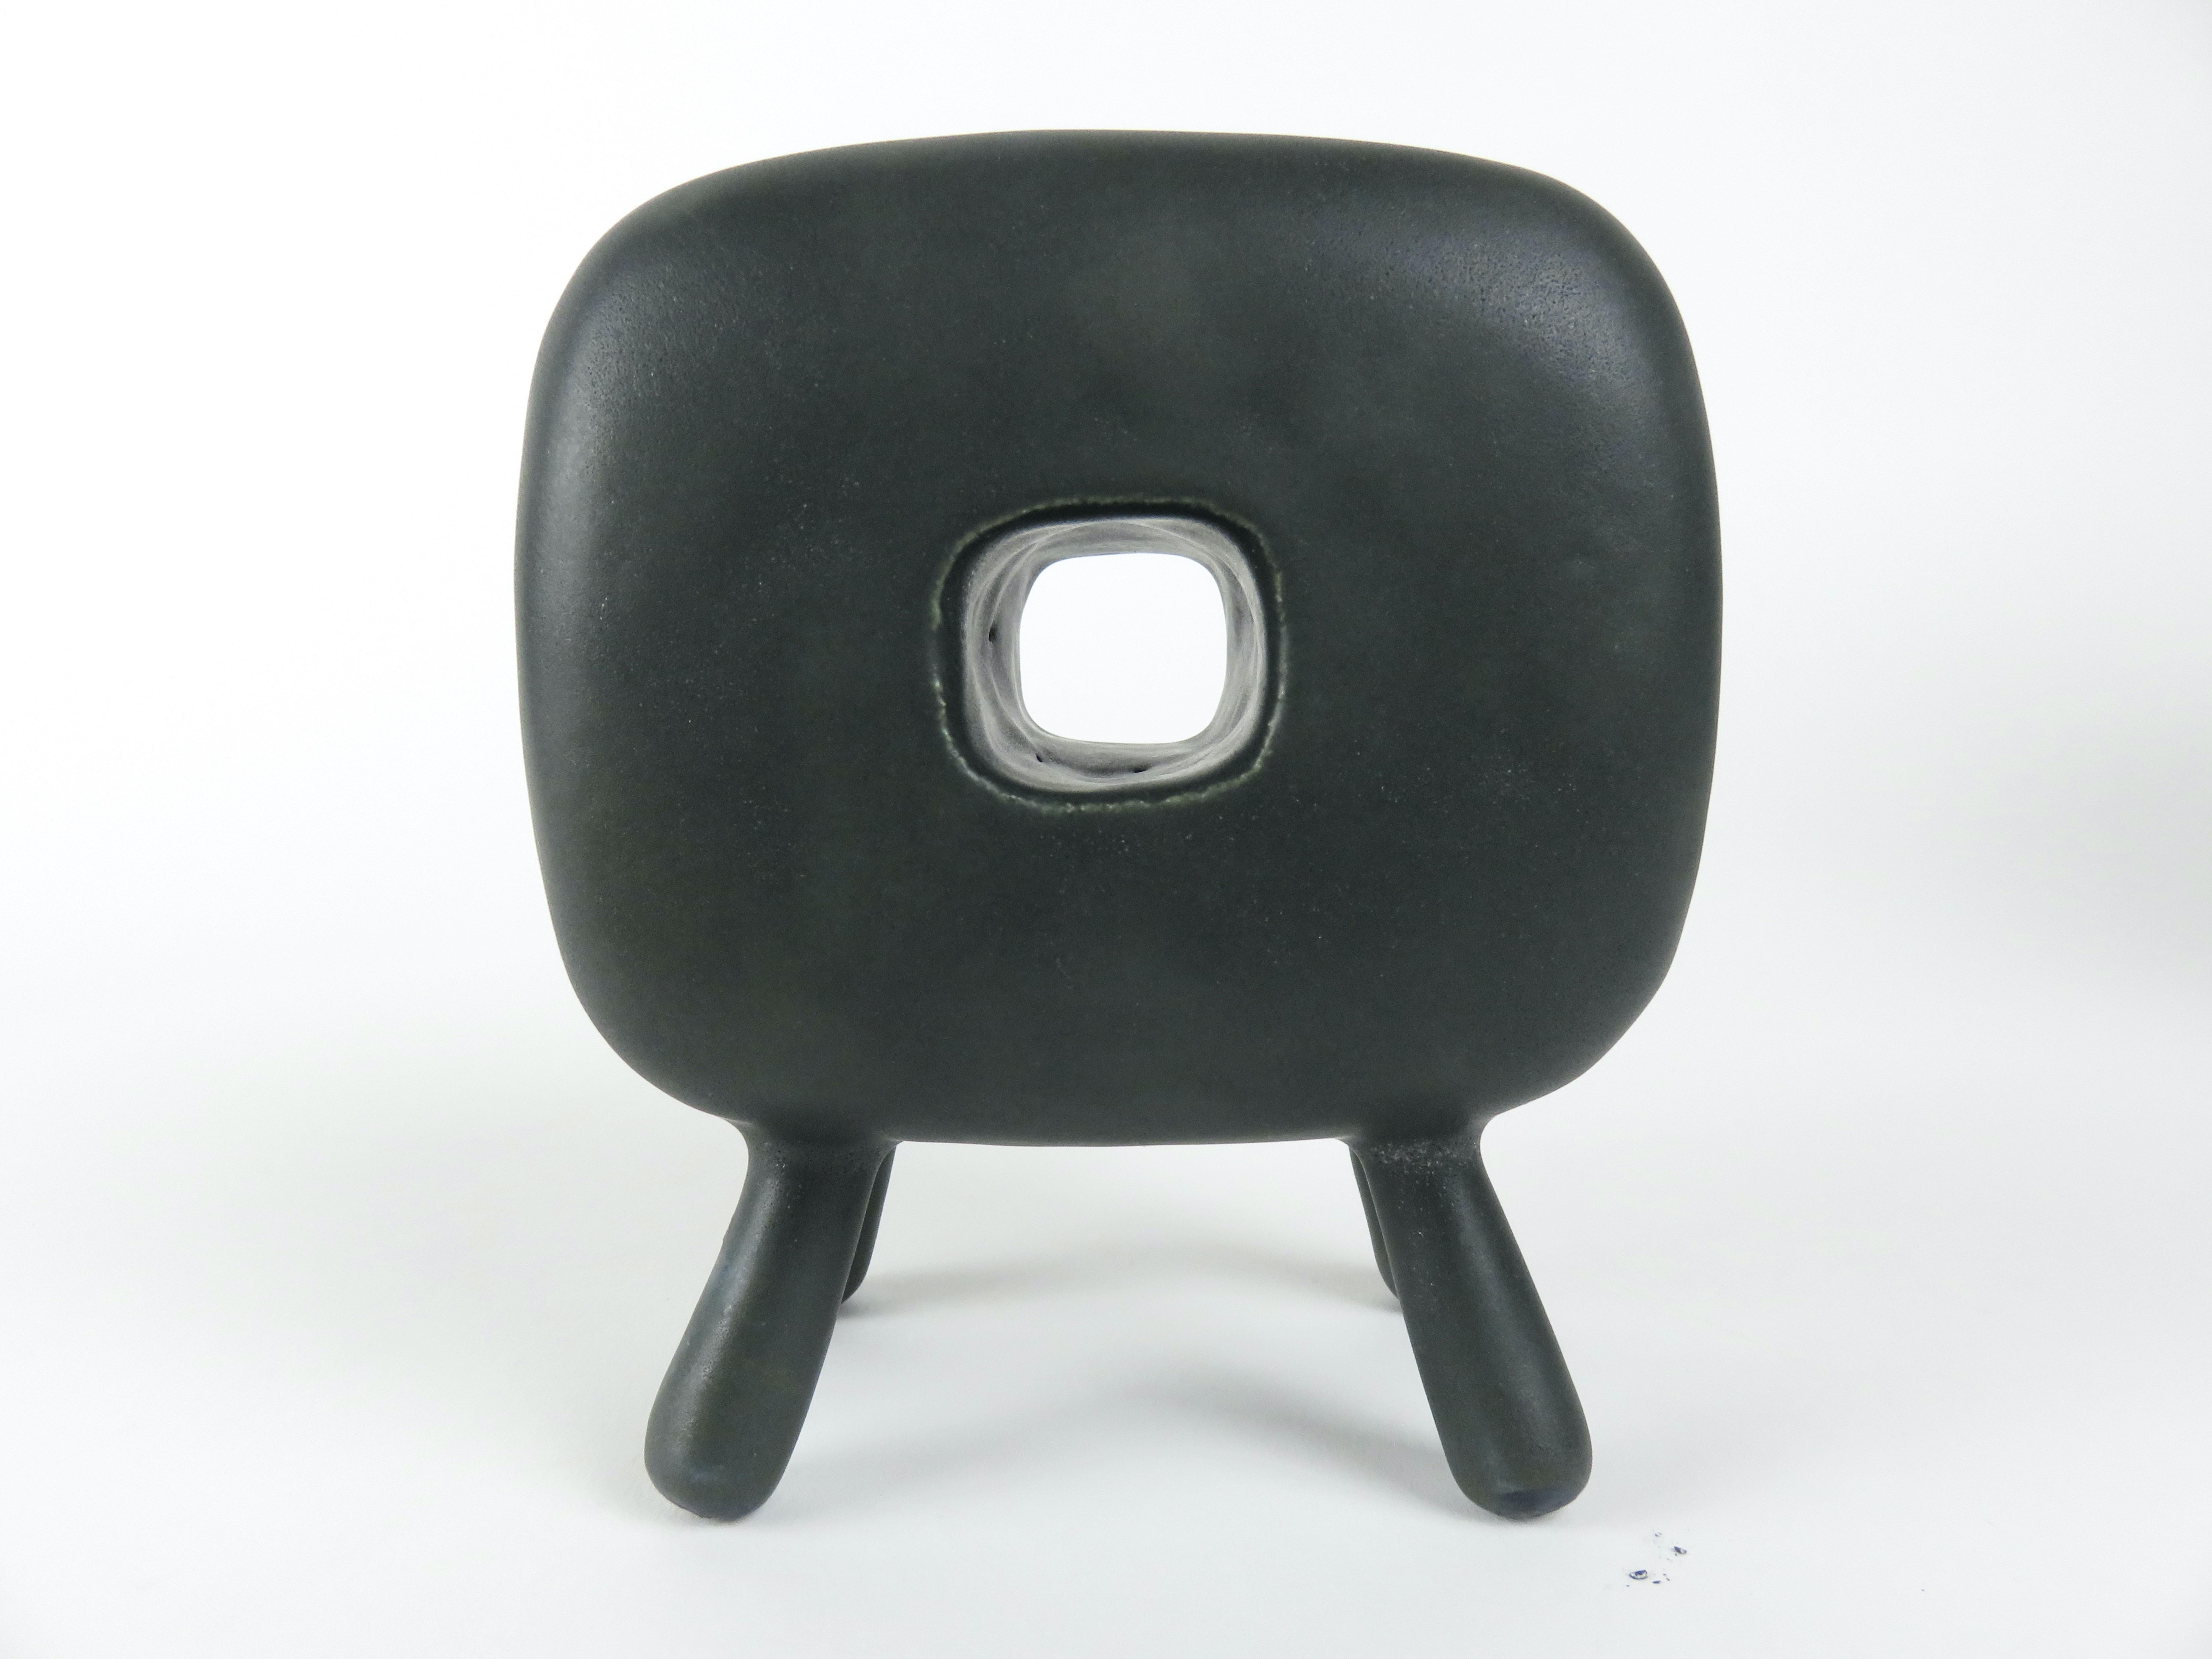 Contemporary Smooth Black Glazed Ceramic Cube with Square Center Opening, 4 Legs, Handbuilt